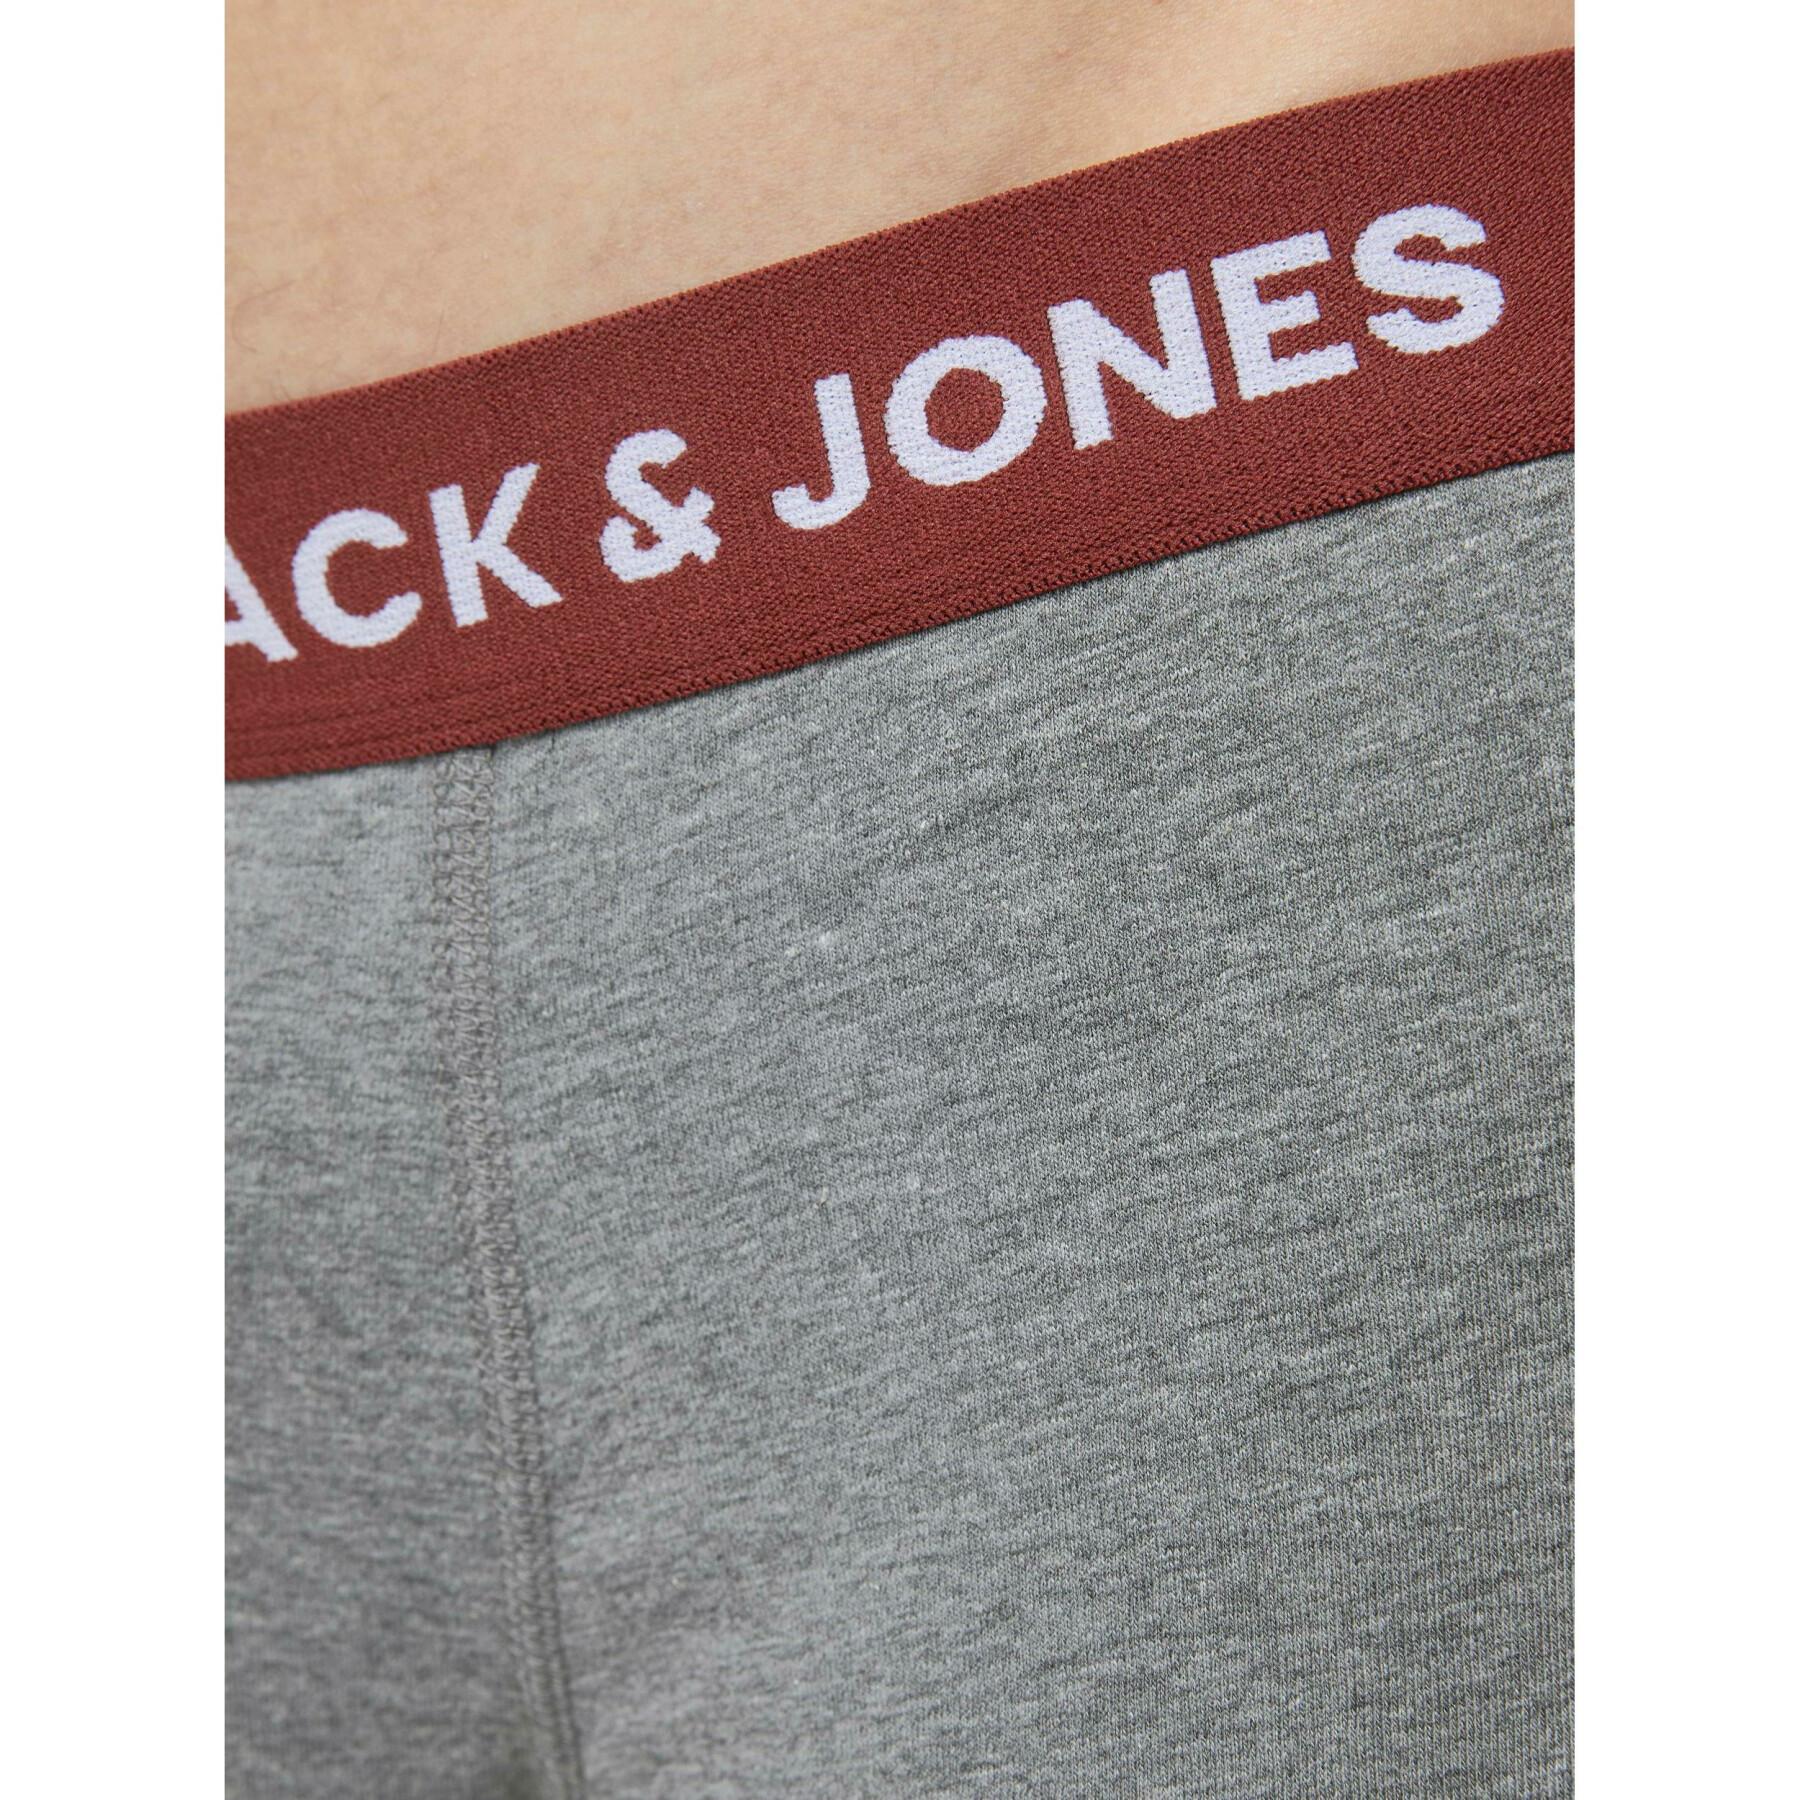 Conjunto de 2 calções de boxer Jack & Jones Jacgrud